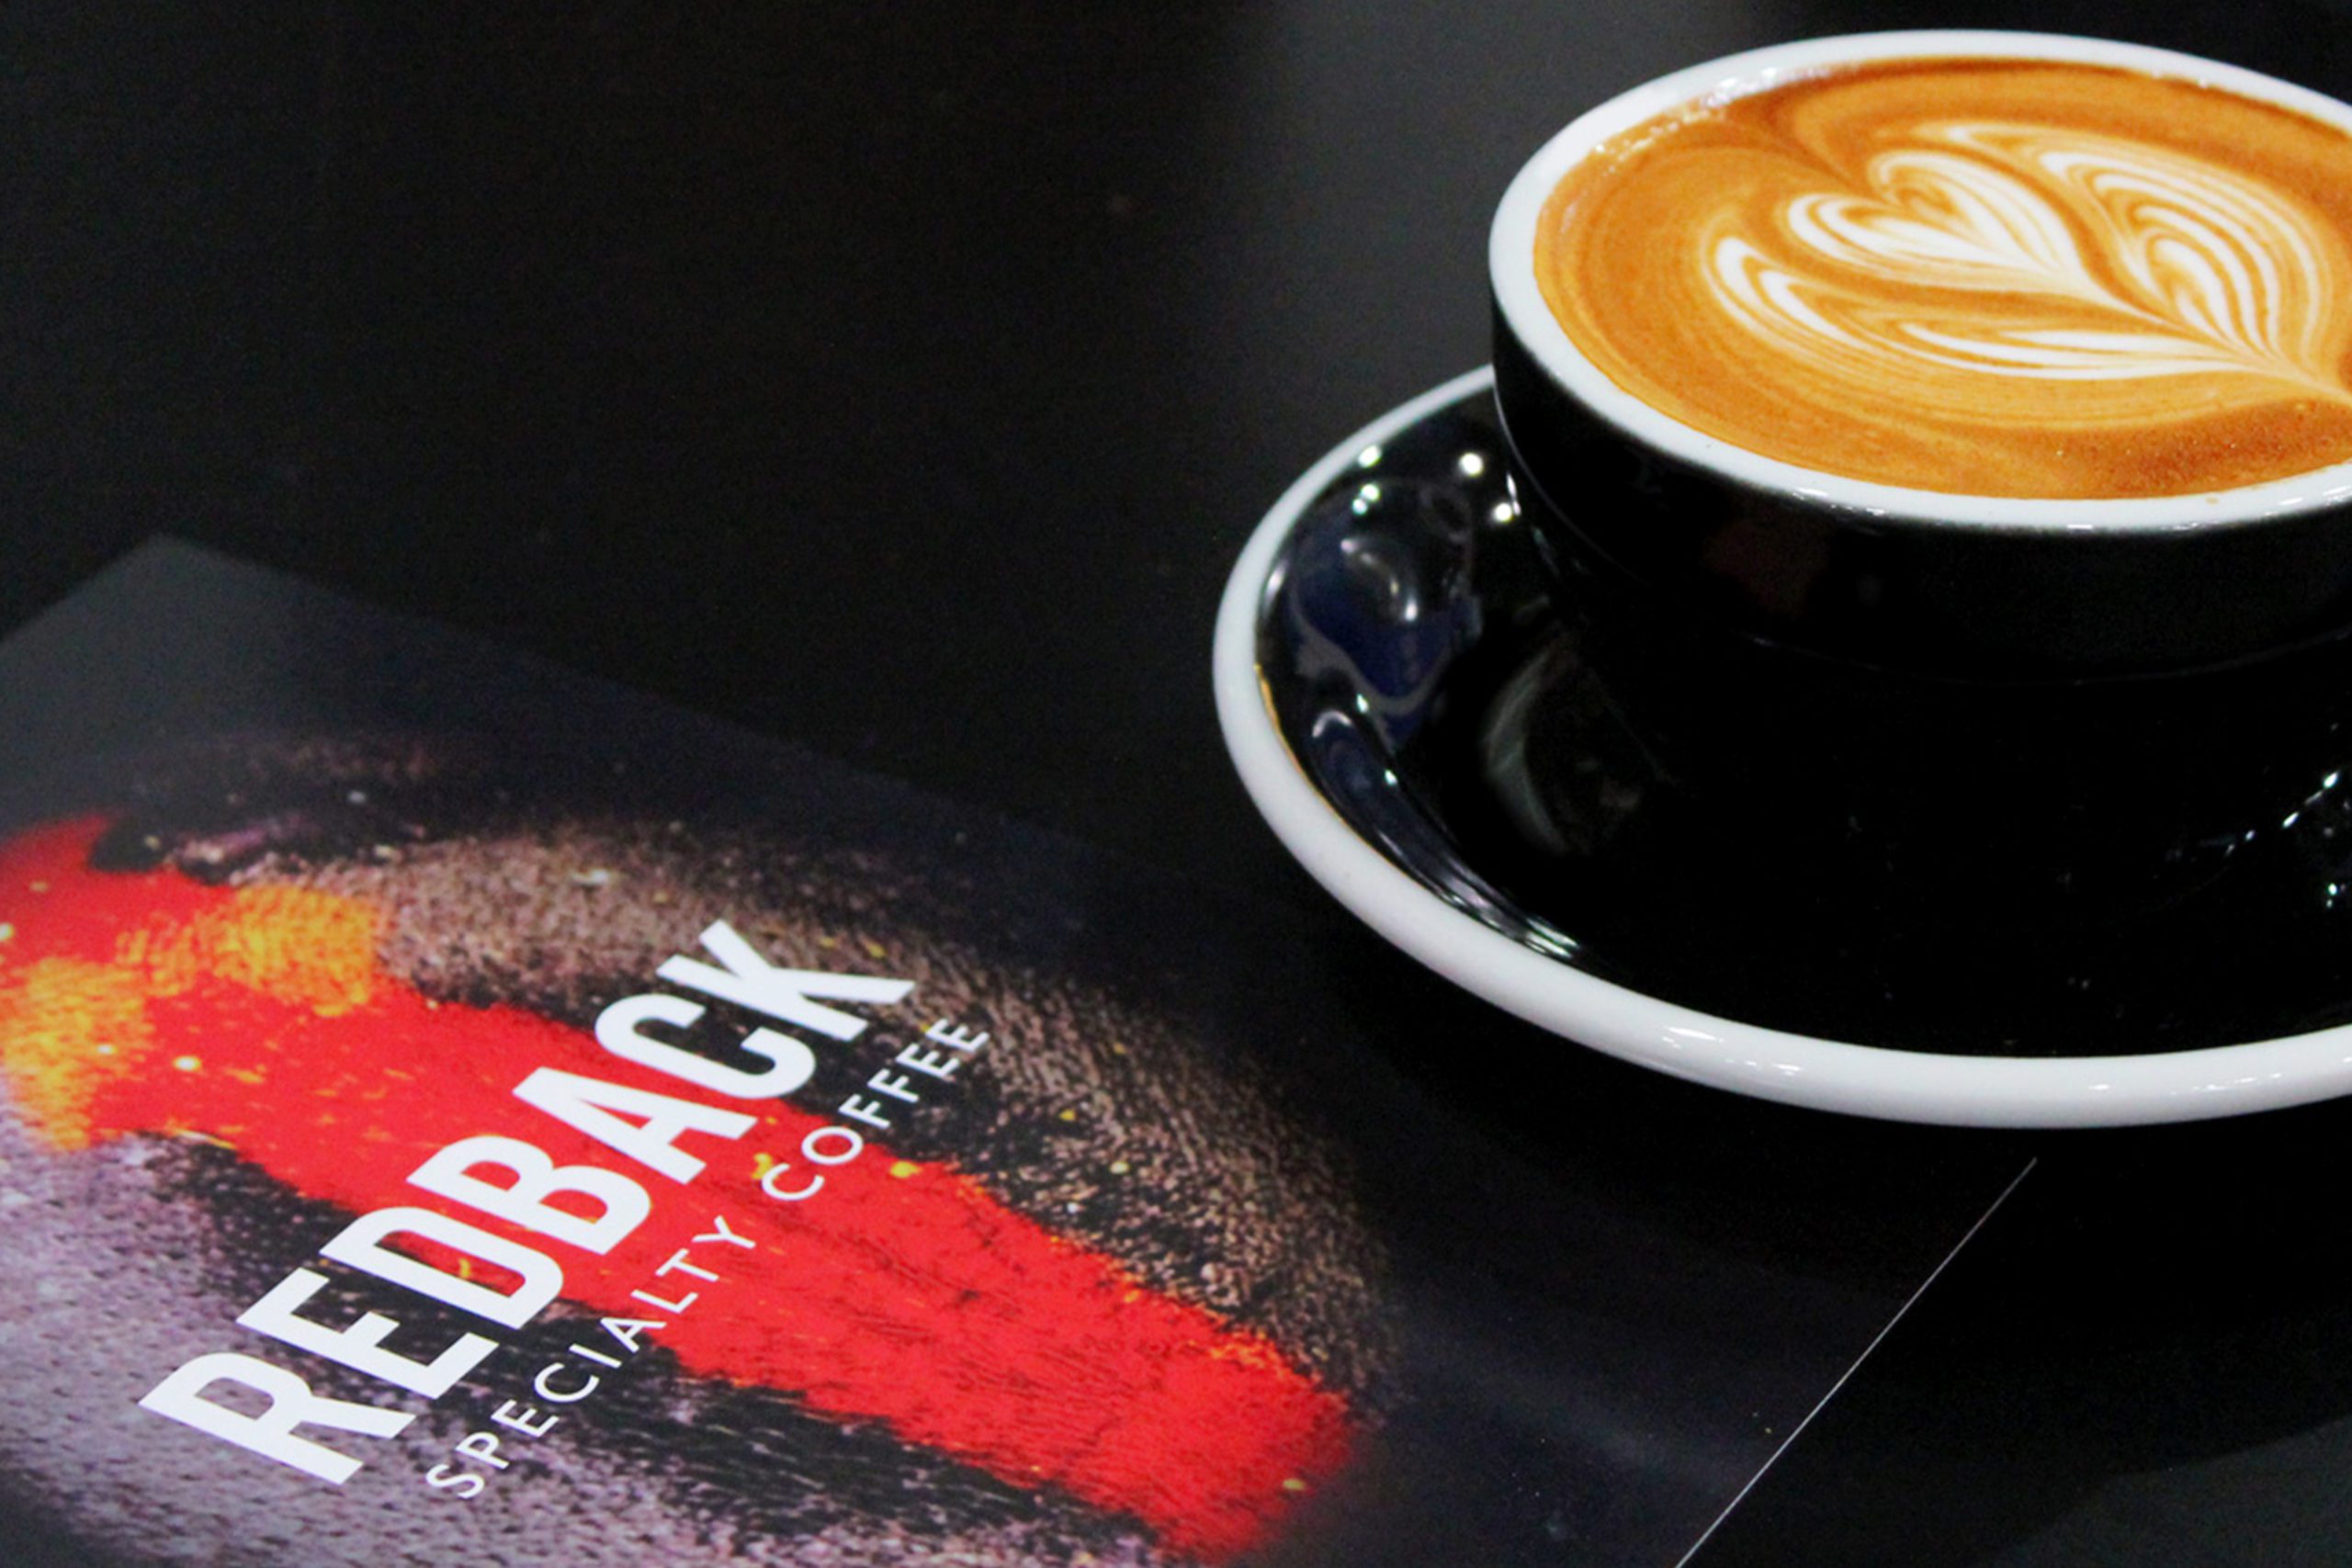 Redback Coffee branding logo next to a coffee